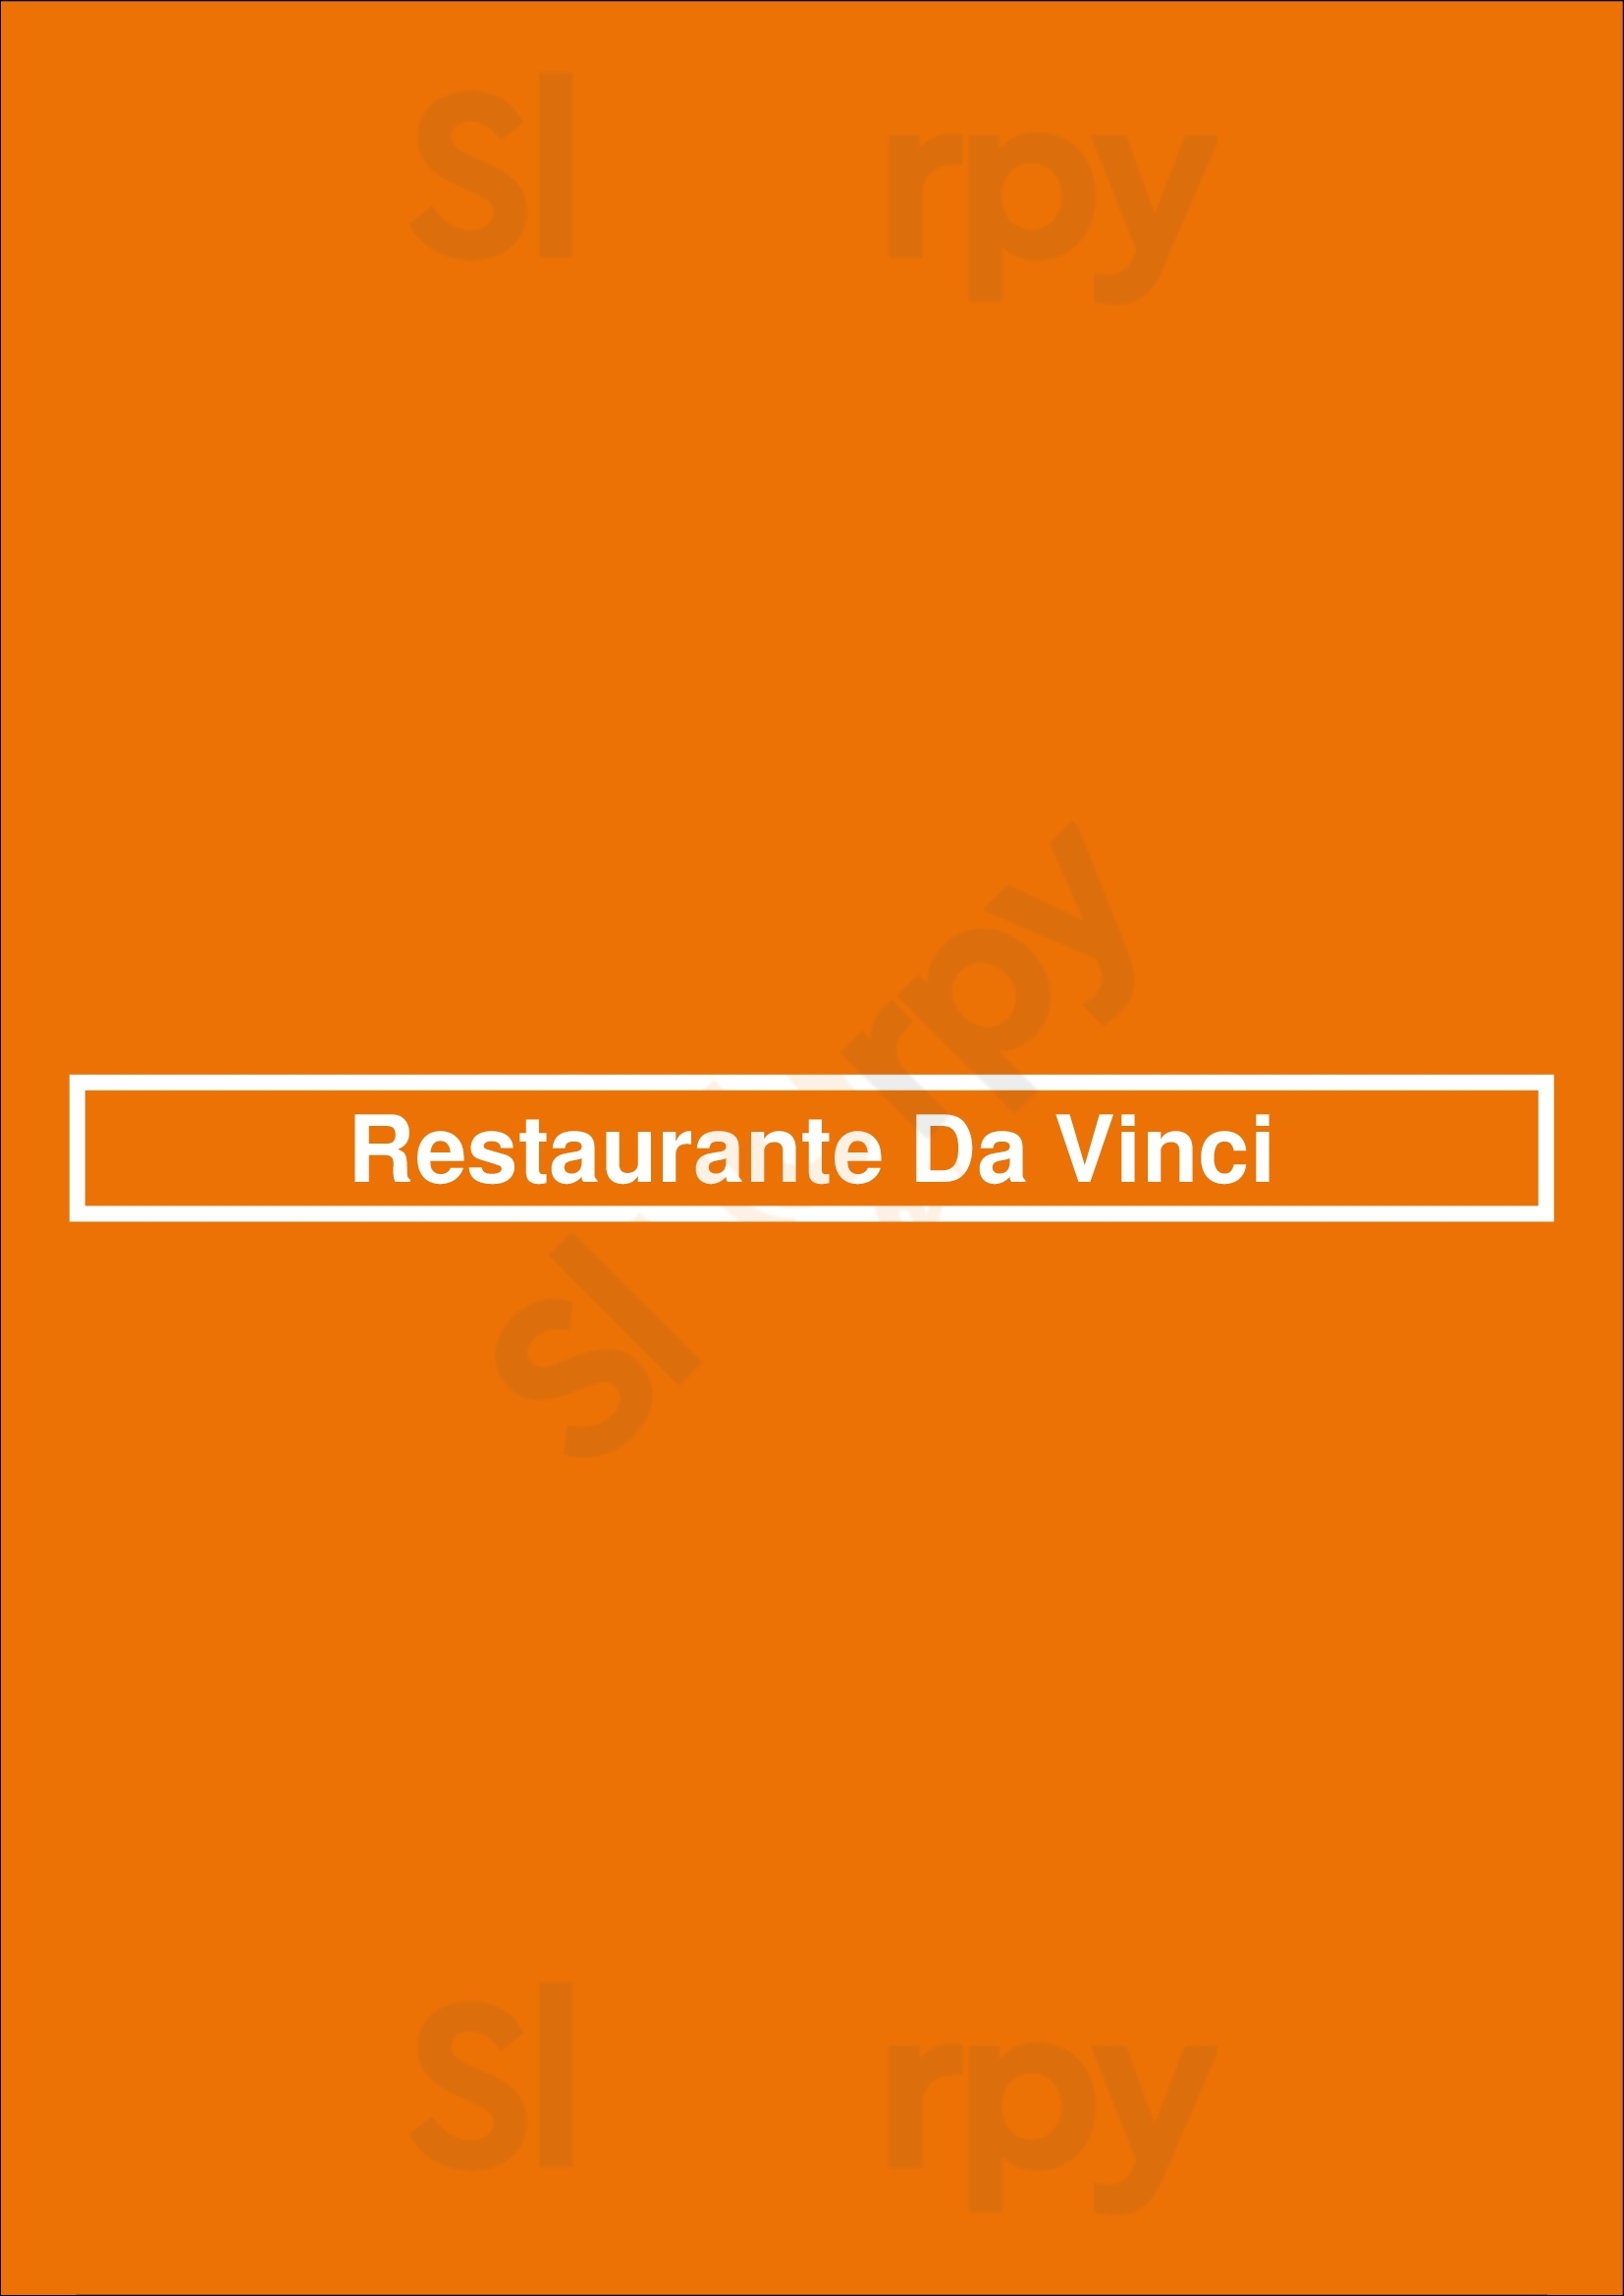 Da Vinci Ristorante & Pizzeria Lisboa Menu - 1